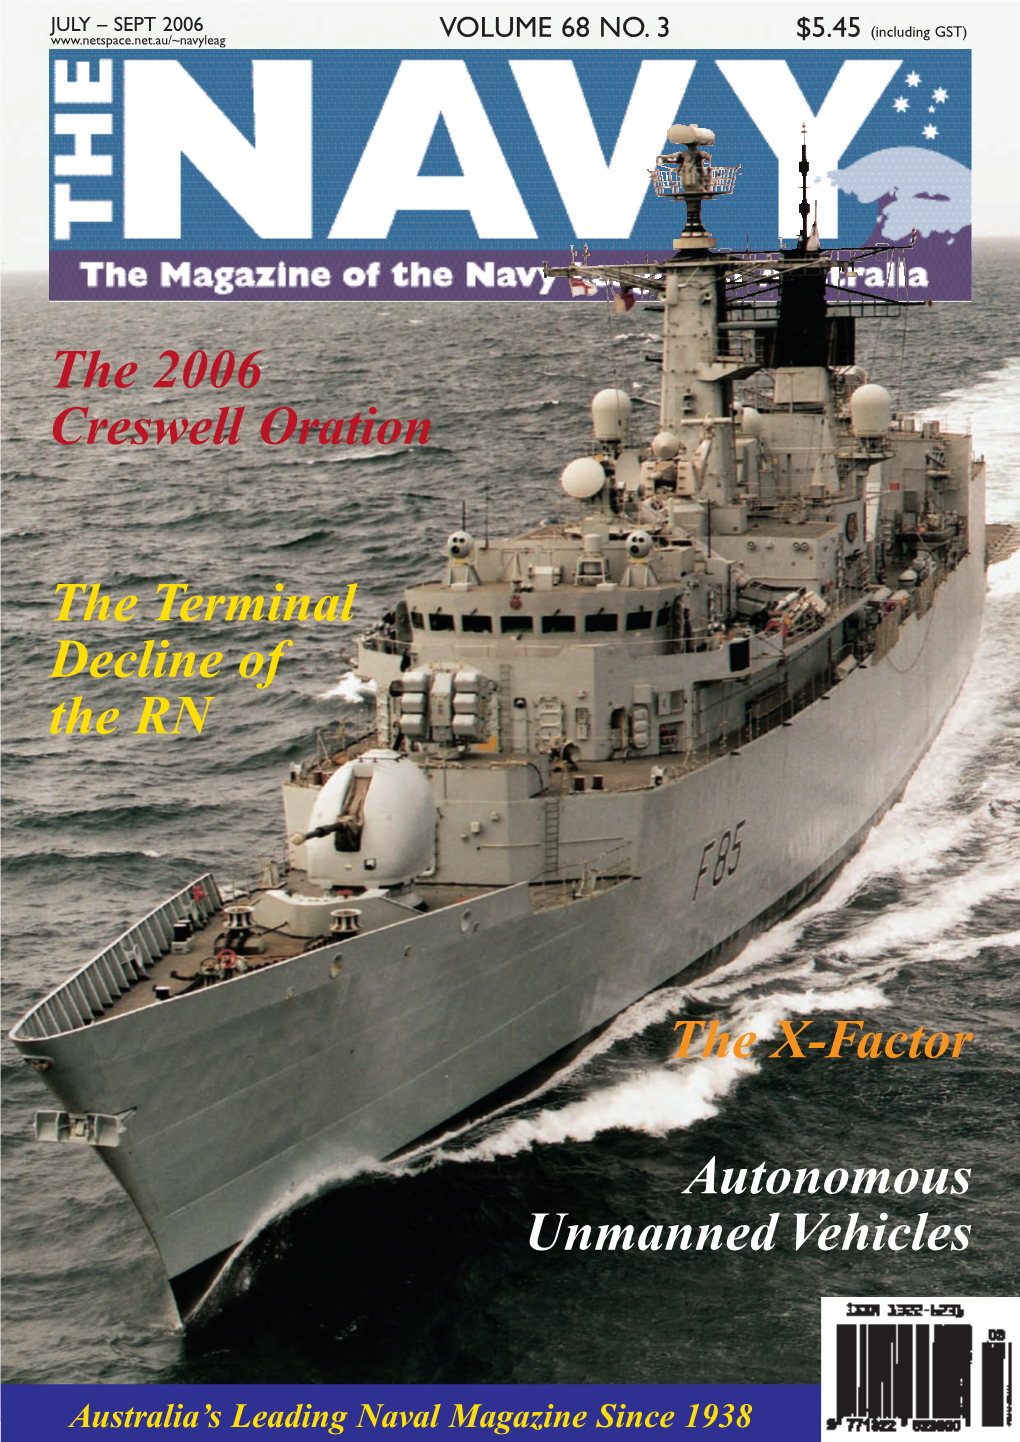 The Navy Vol 68 No 3 Jul 2006